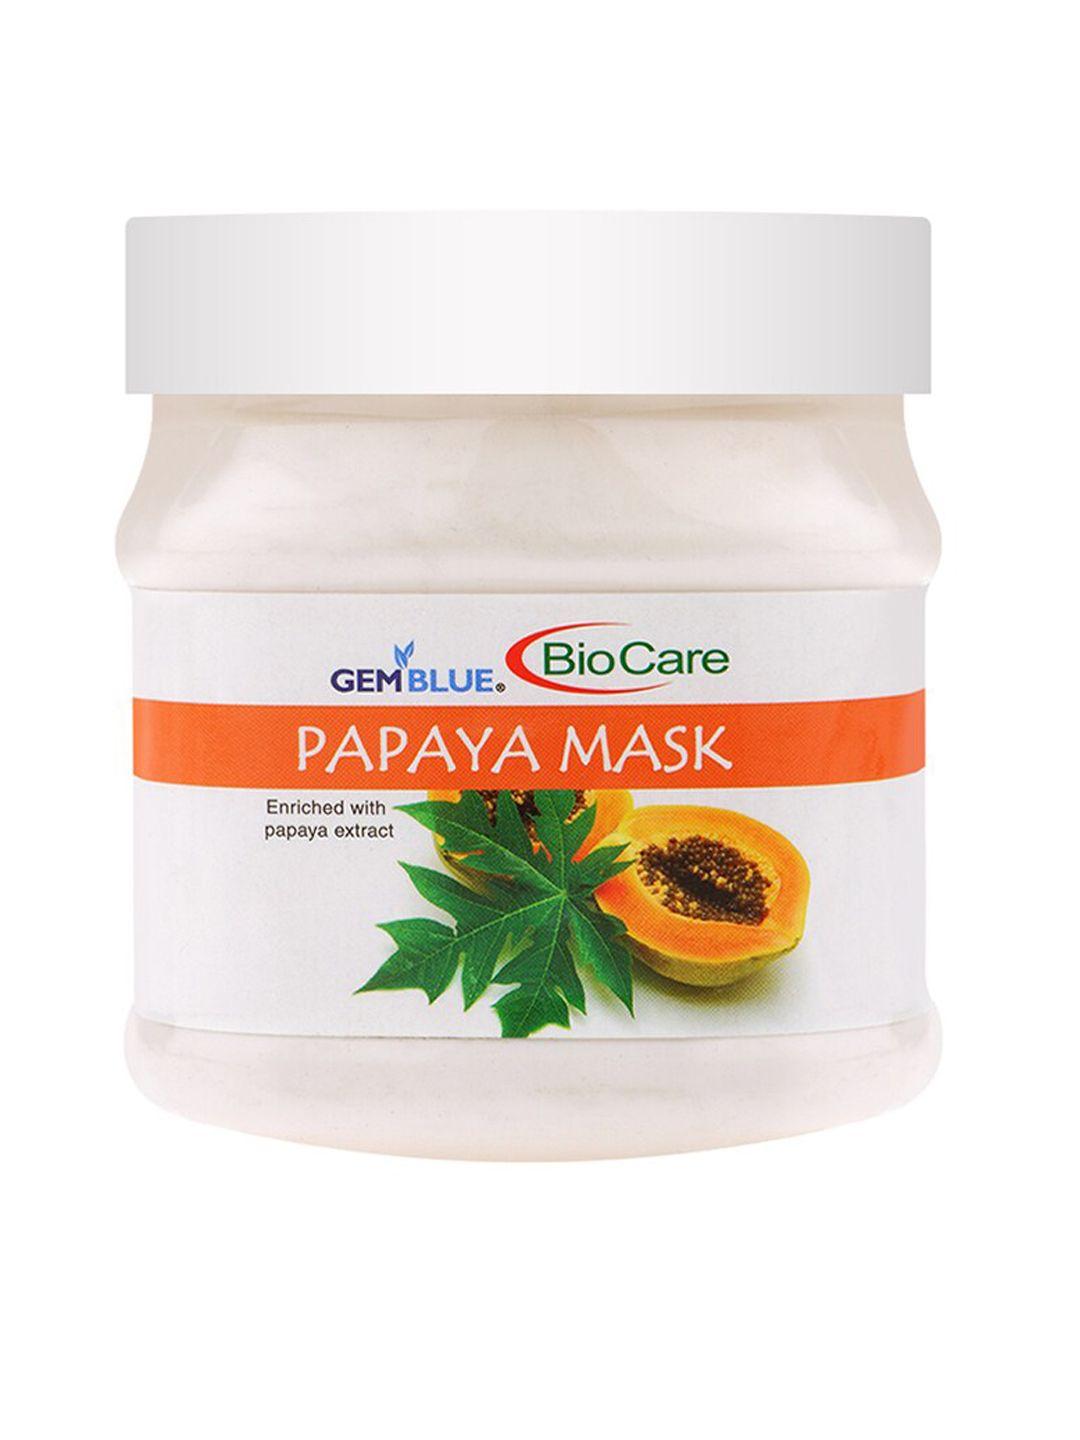 gemblue biocare papaya mask 500ml